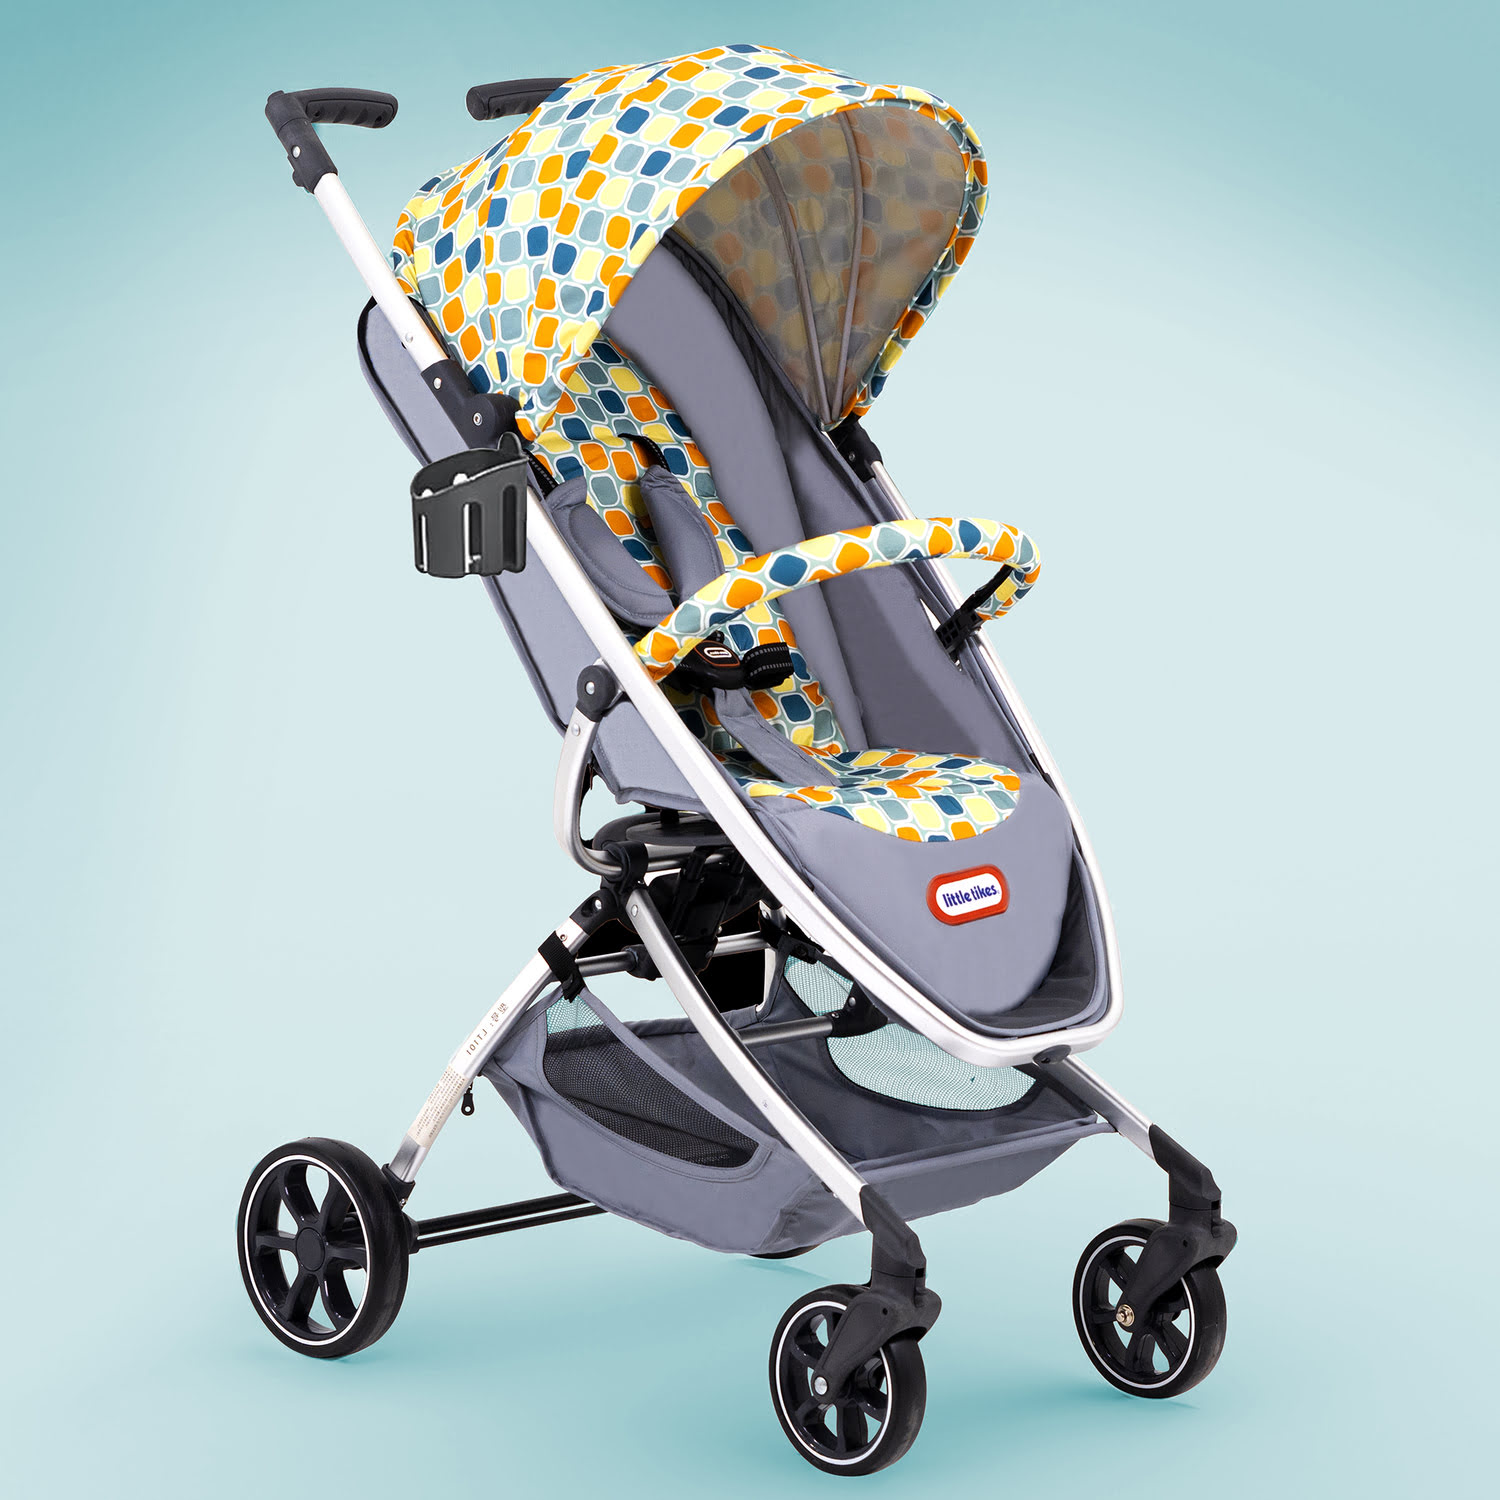 Premium Lightweight Travel-friendly Foldable Baby Stroller – Foldable Stroller with Adjustable Backrest & Canopy, 5-Point Safety Belt & 360° Front Wheels – International Series